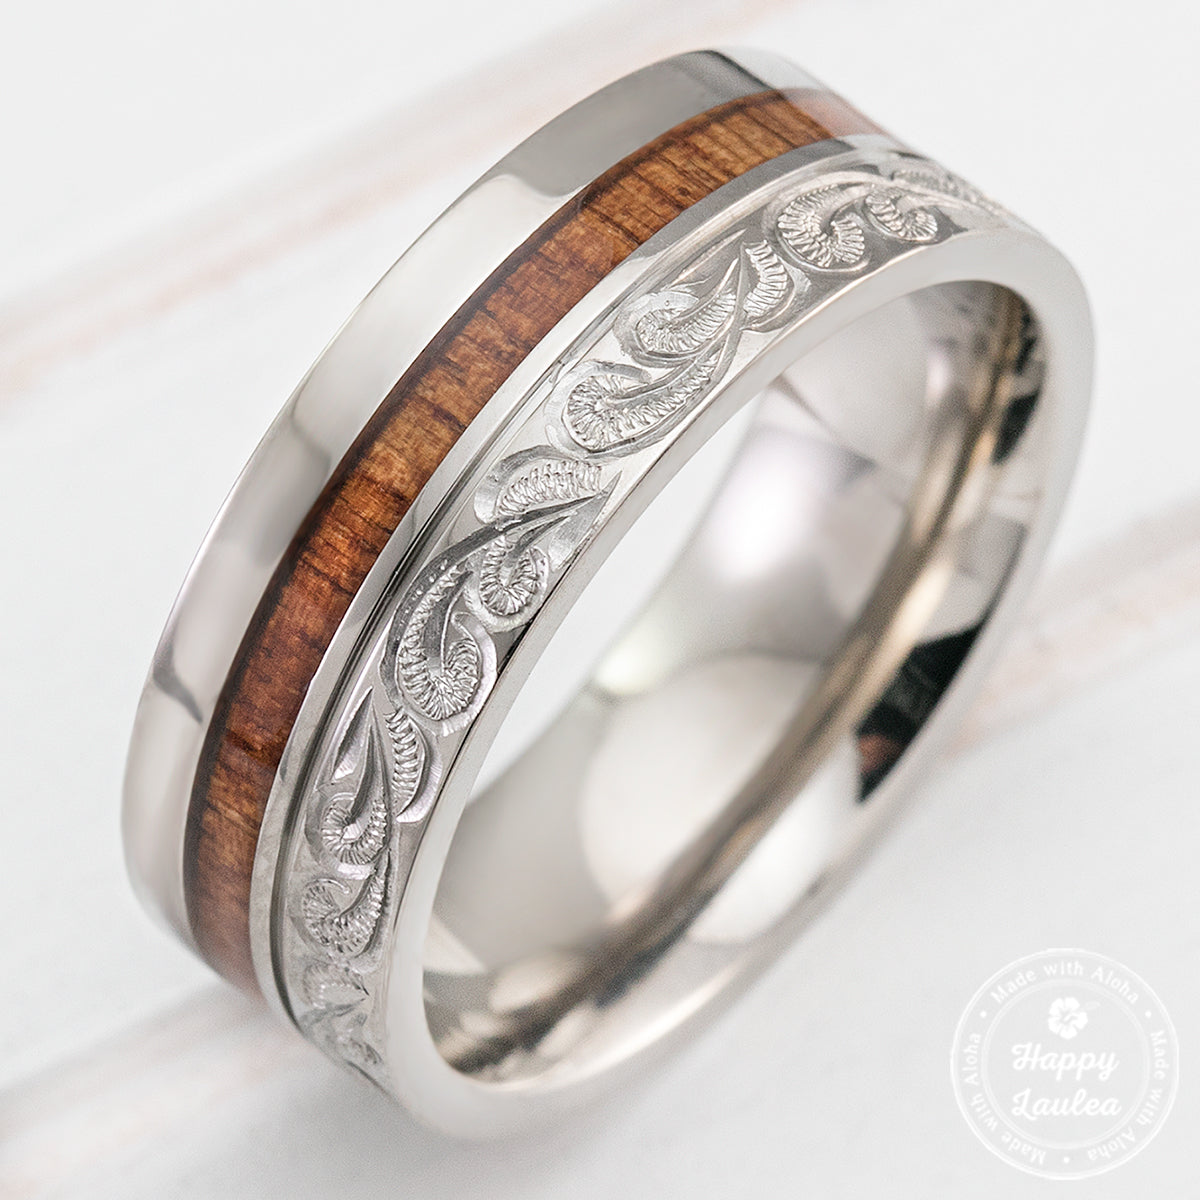 Titanium Hand Engraved Scroll Design Ring with Hawaiian Koa Wood Inlay - 8mm, Flat Shape, Comfort Fitment